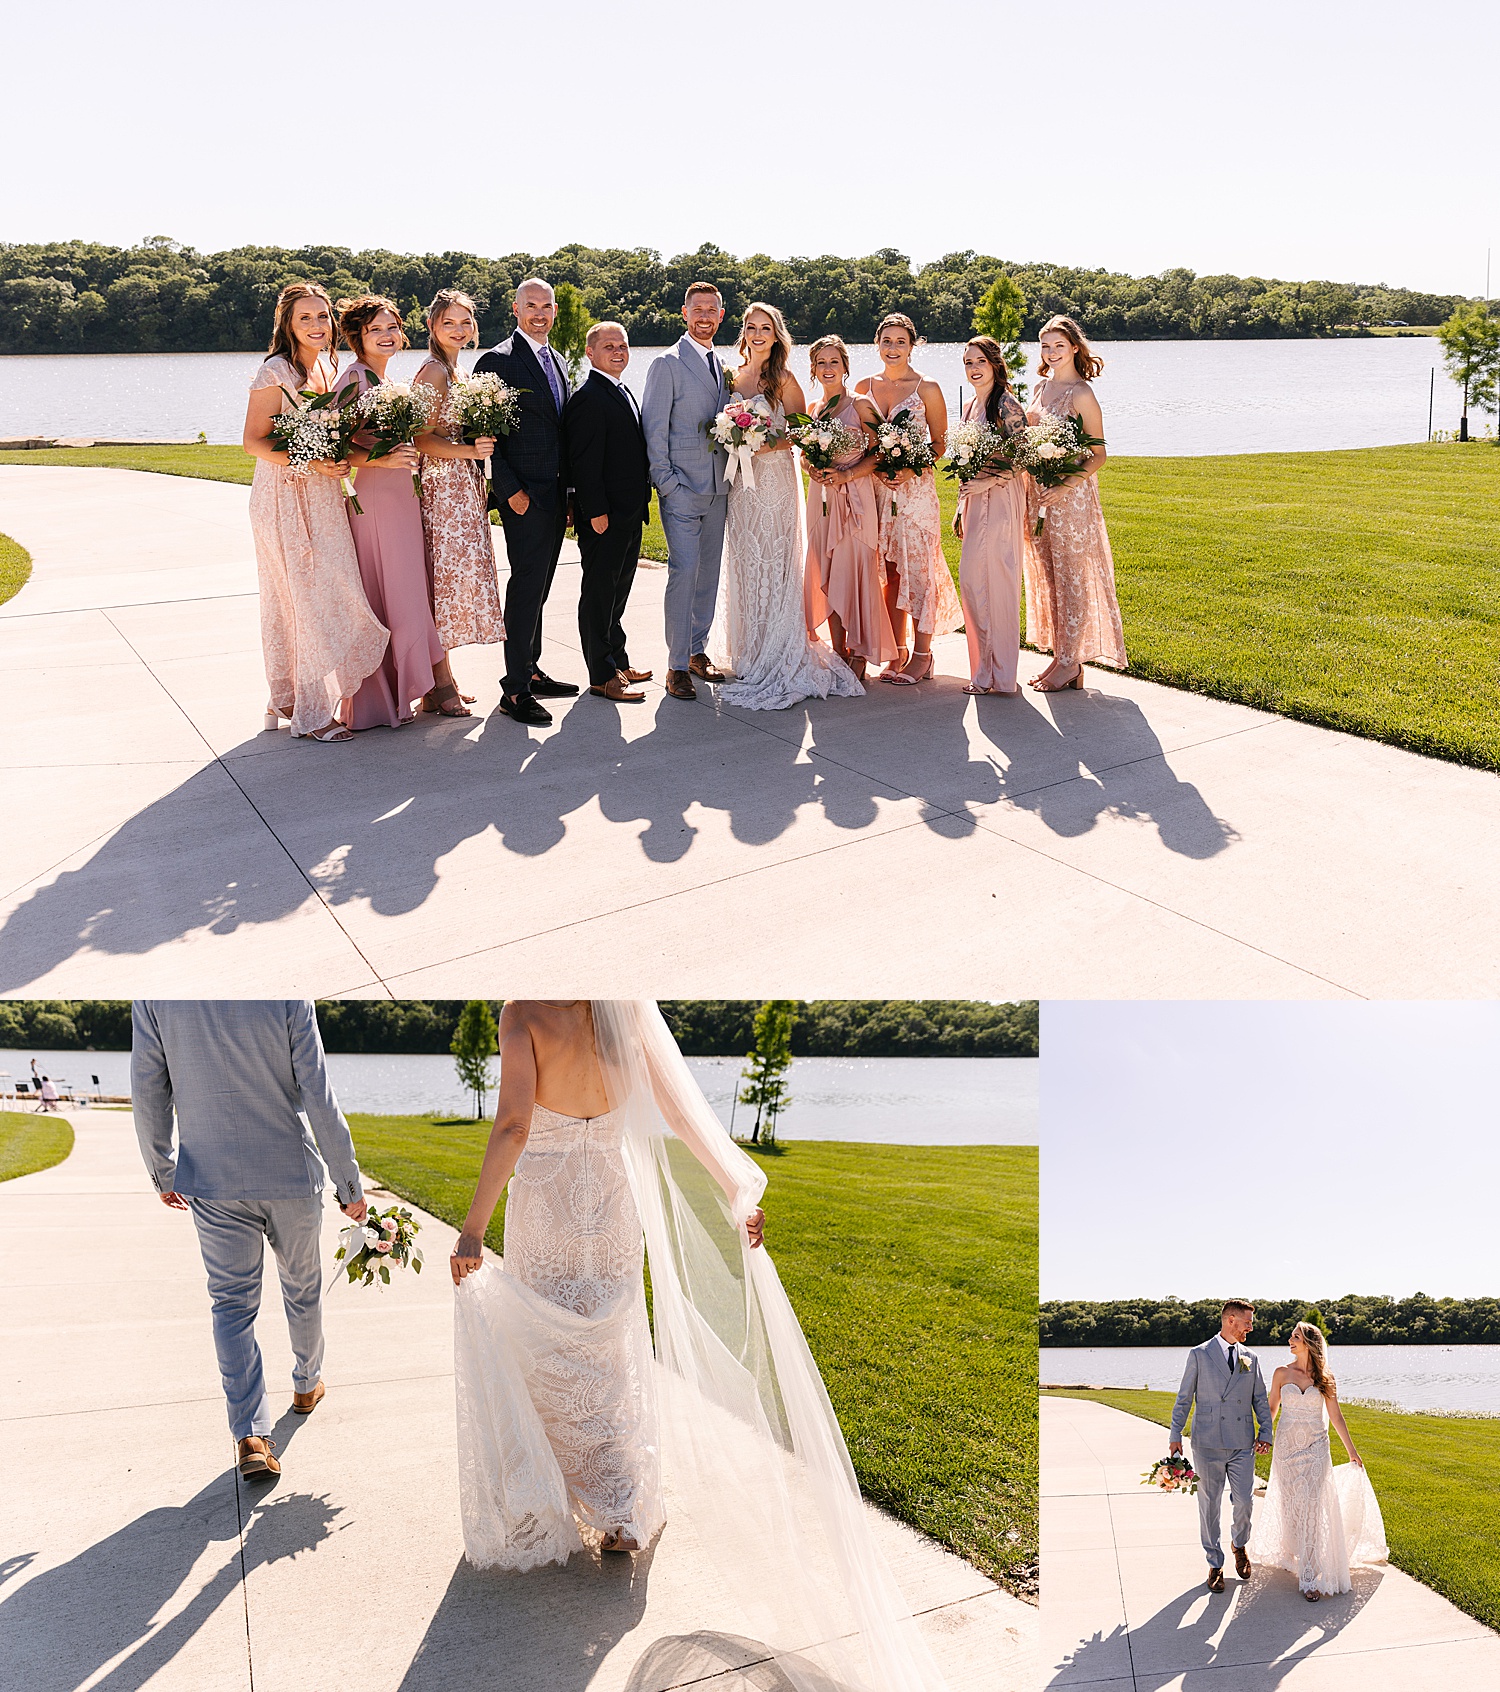 party photos at the lake in Kansas with Kansas wedding photographer 